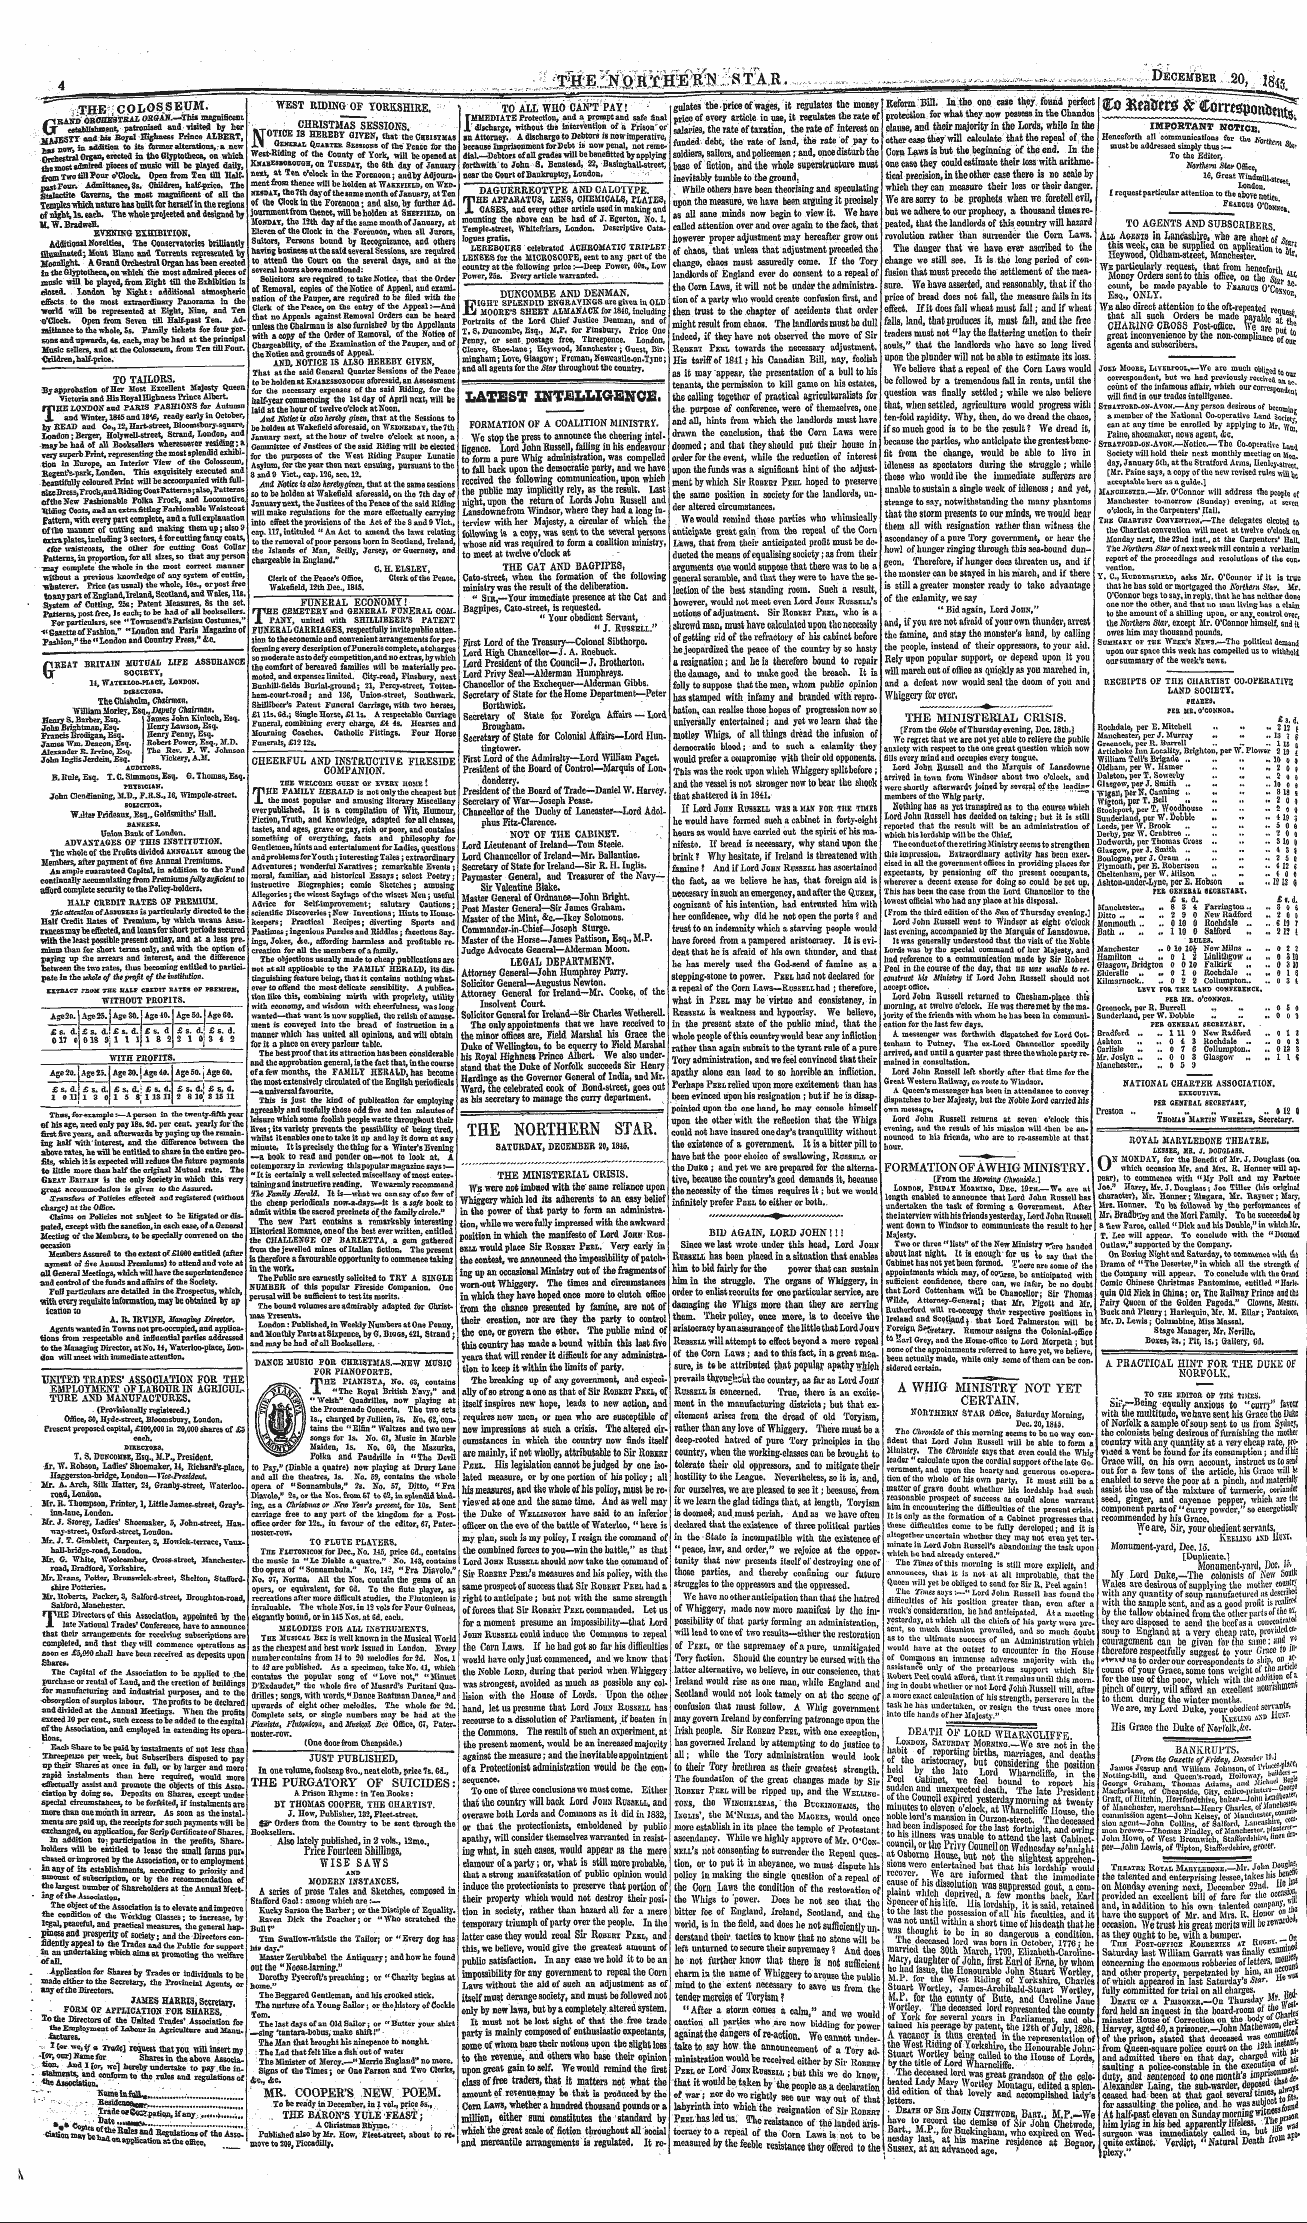 Northern Star (1837-1852): jS F Y, 4th edition - Ad00416